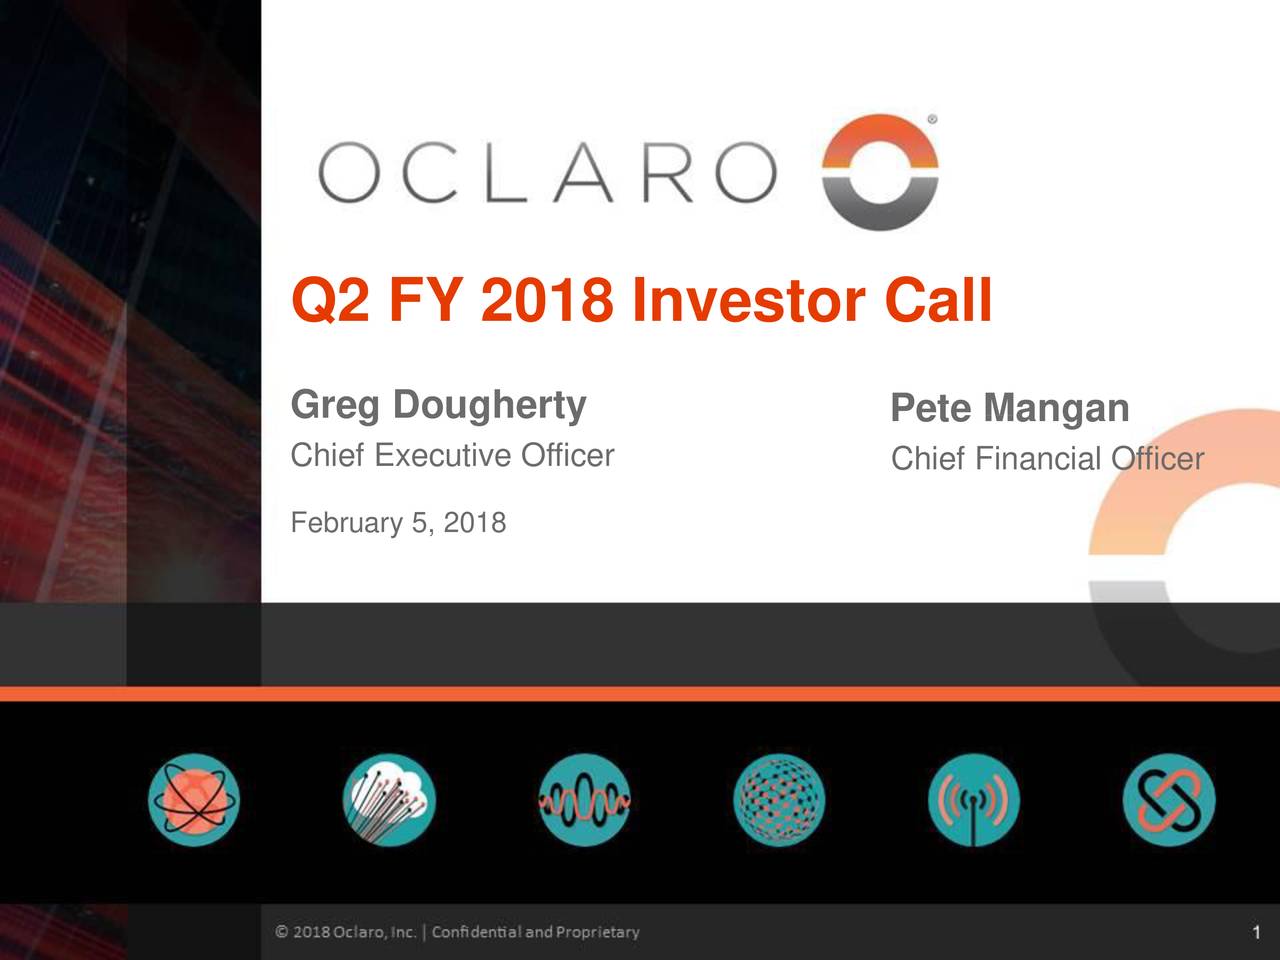 Q2 FY 2018 Investor Call